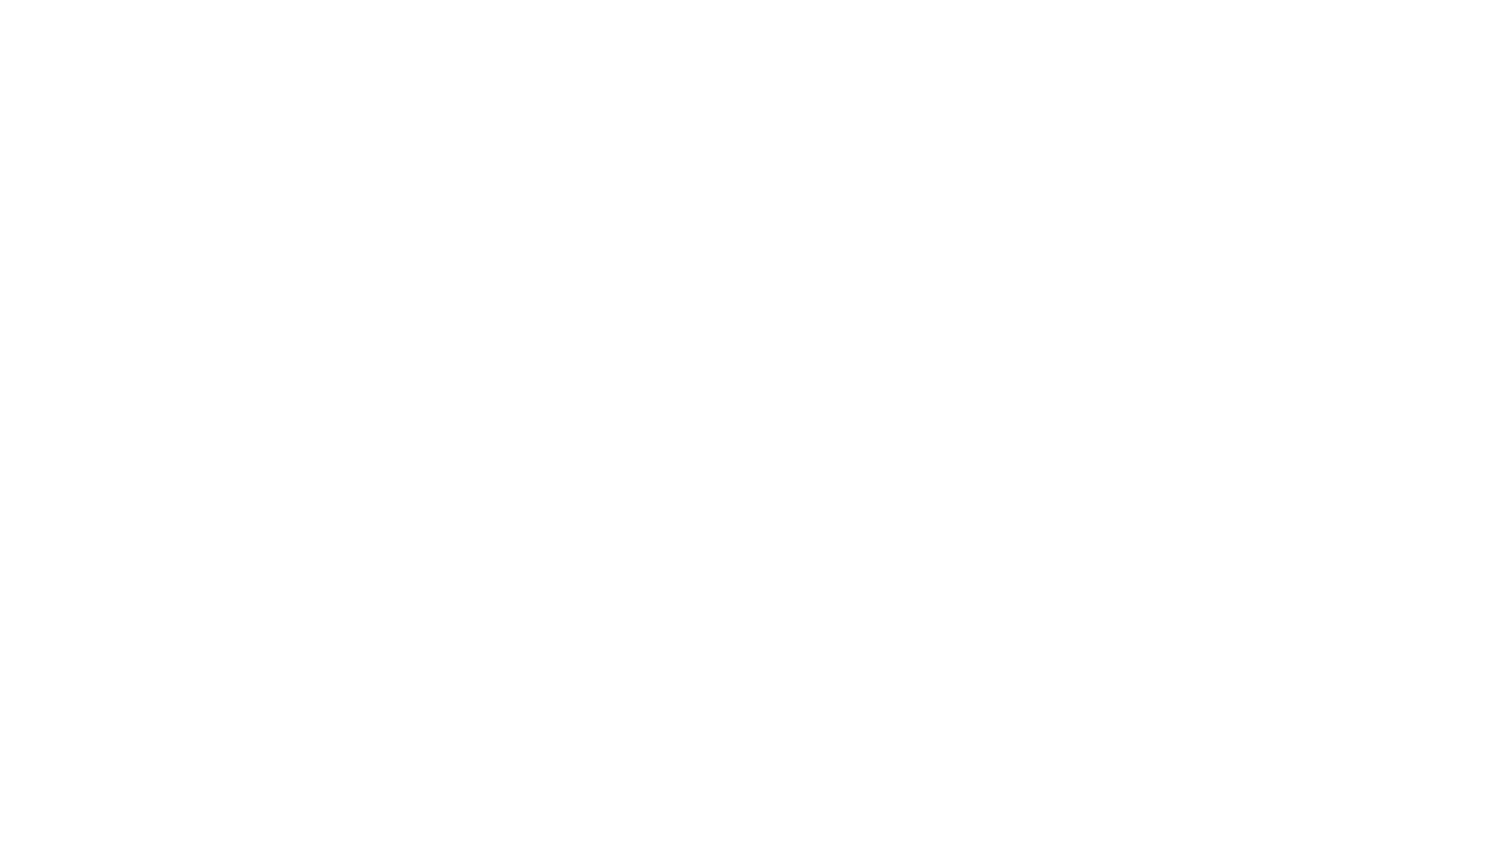 Zumiez logo for dark backgrounds (transparent PNG)